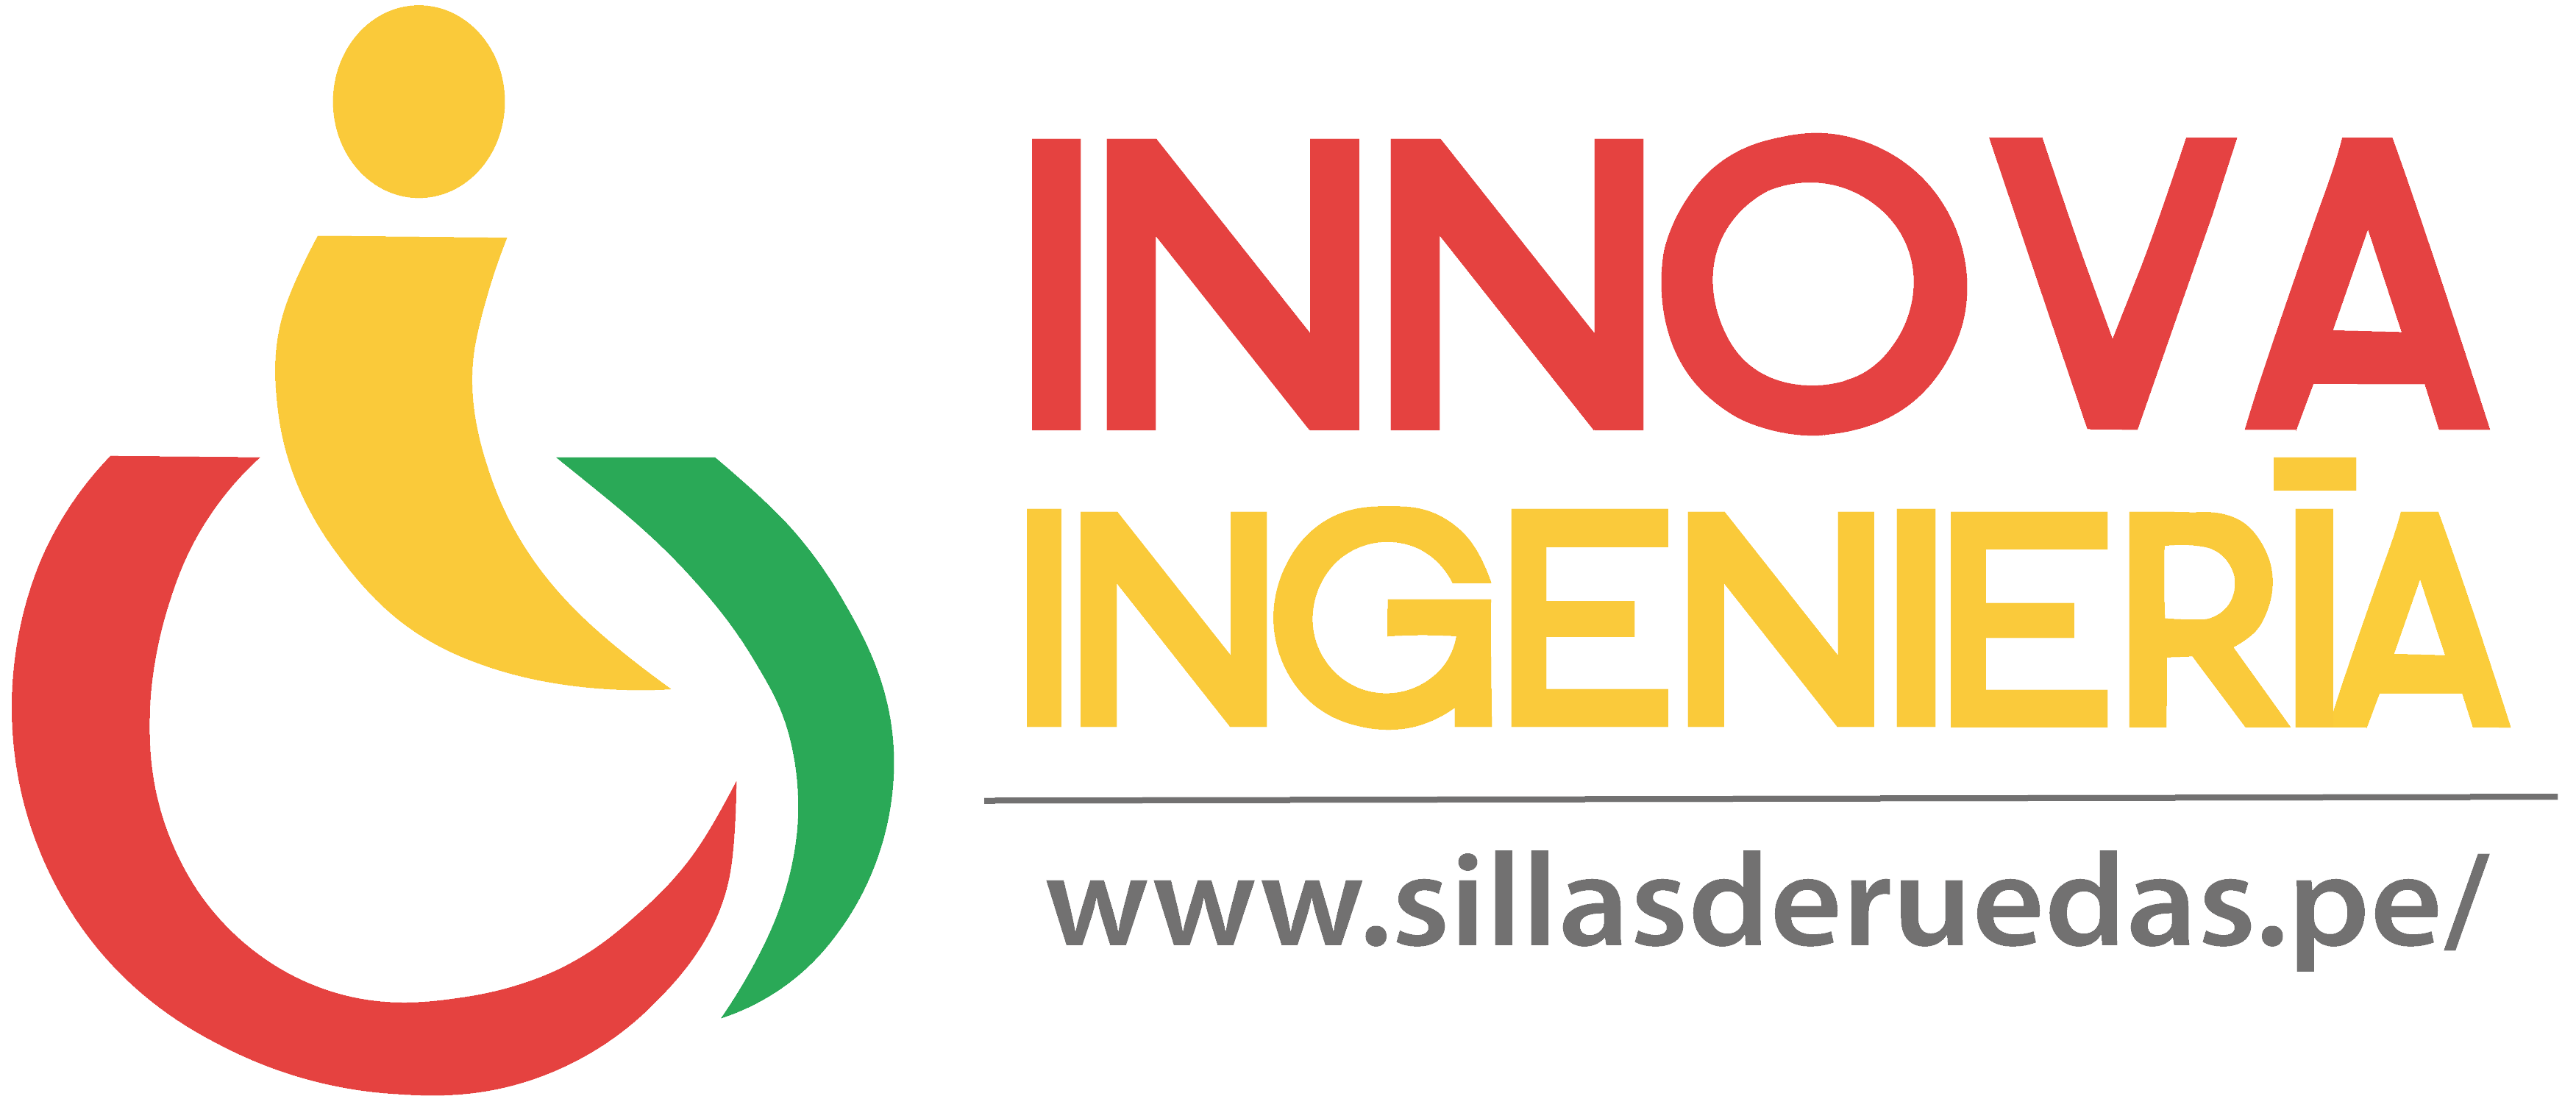 innova-ingenieria-logo2